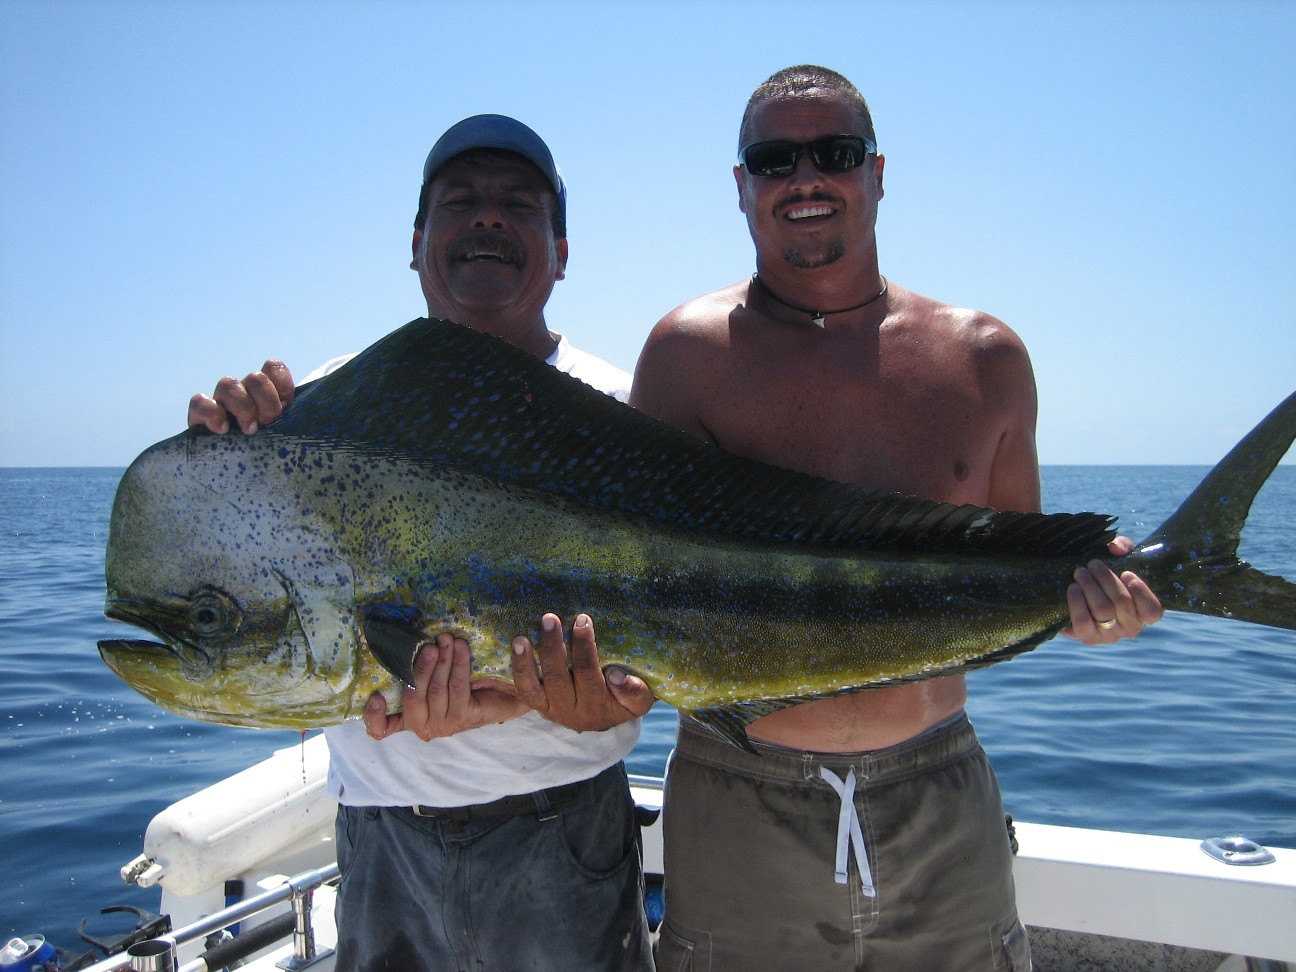 Penn international Big Game Hooks, 9/0, Cow Tuna,Shark Fishing